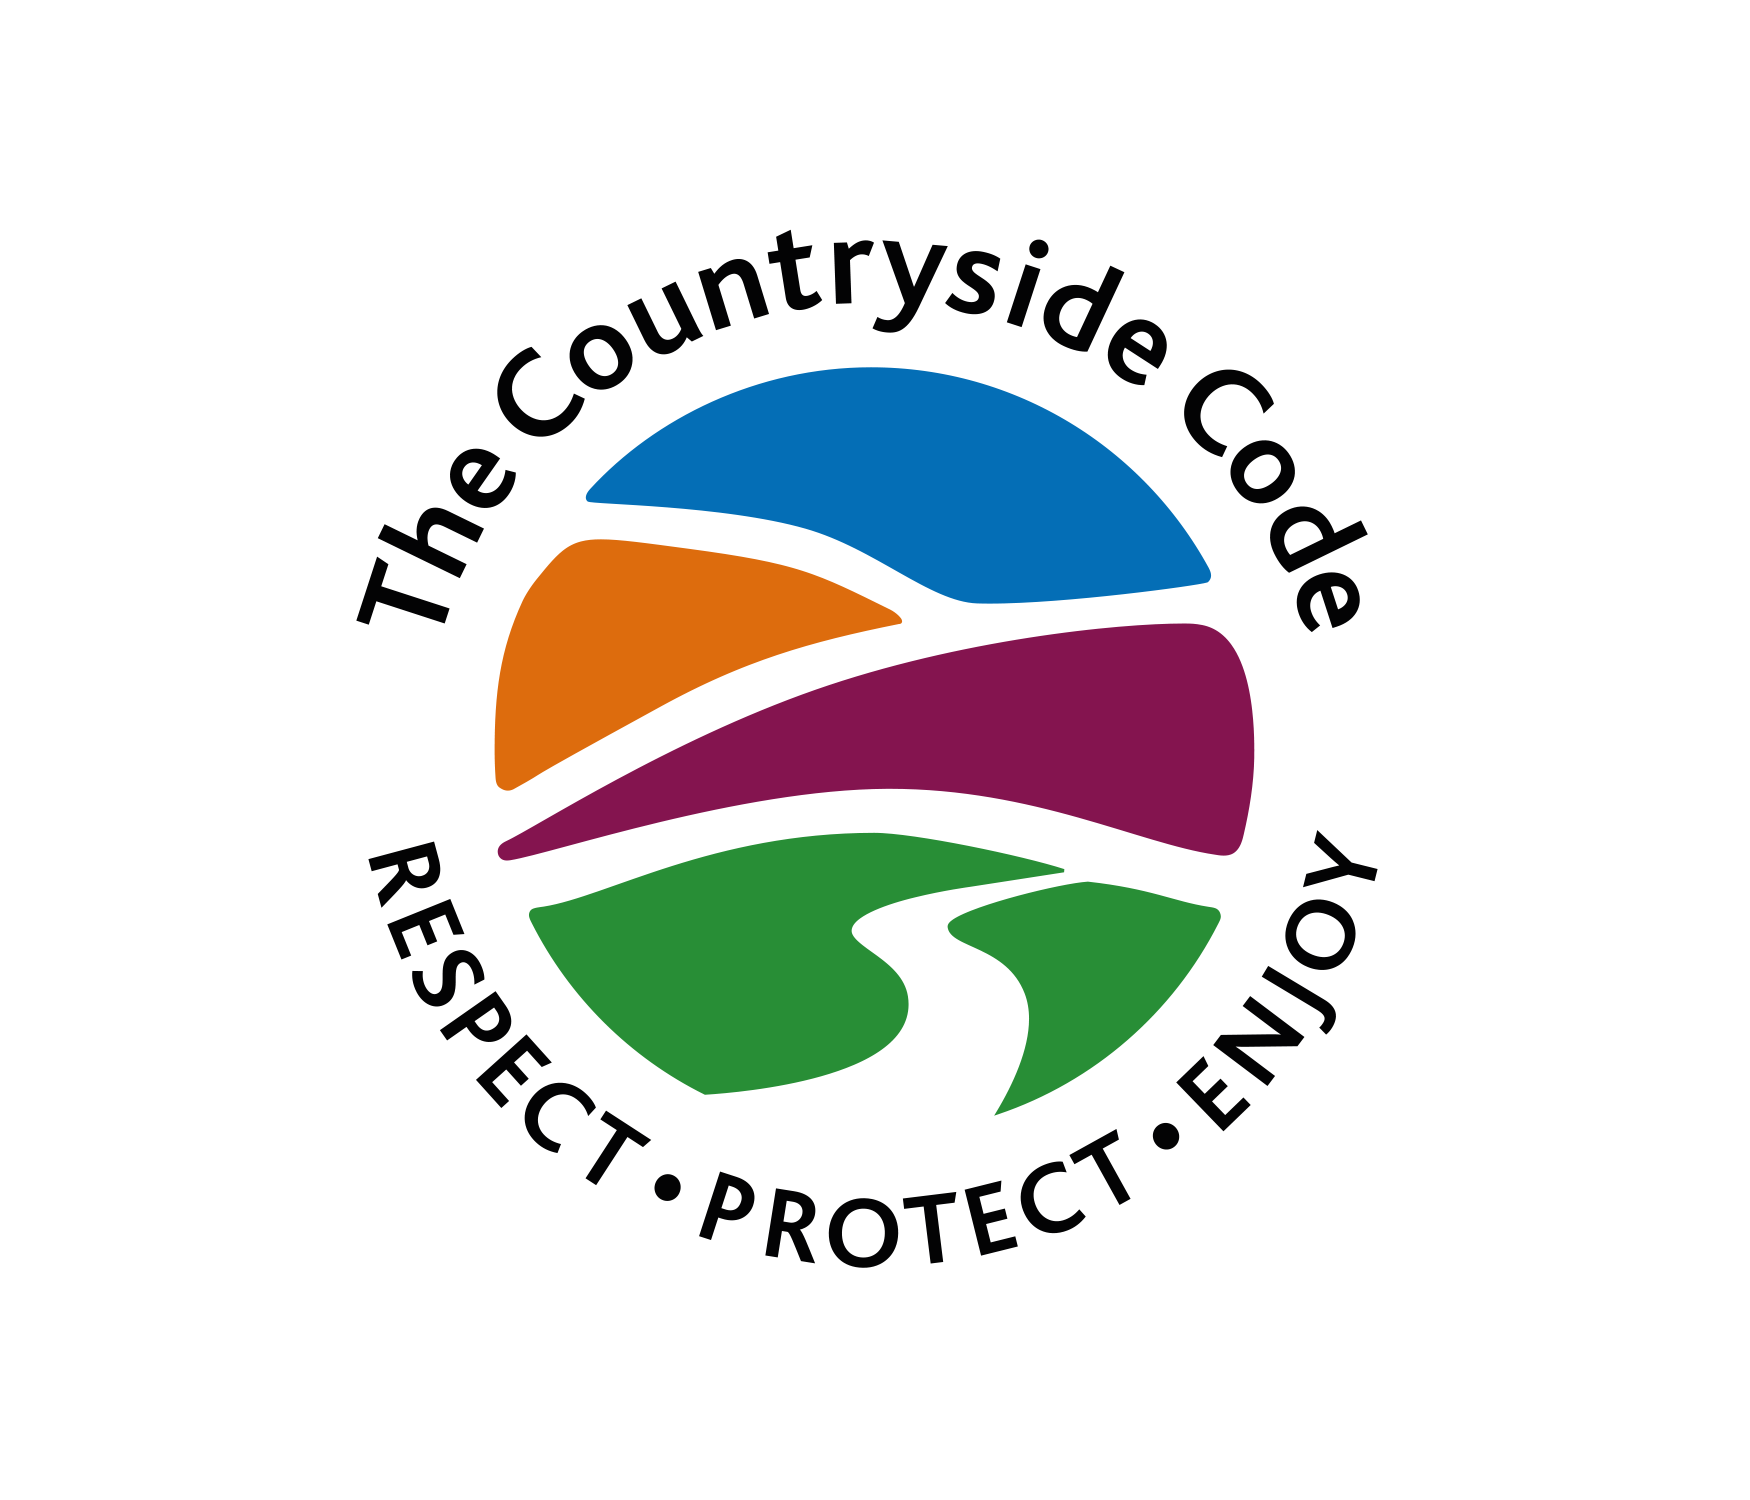 Countryside Code logo